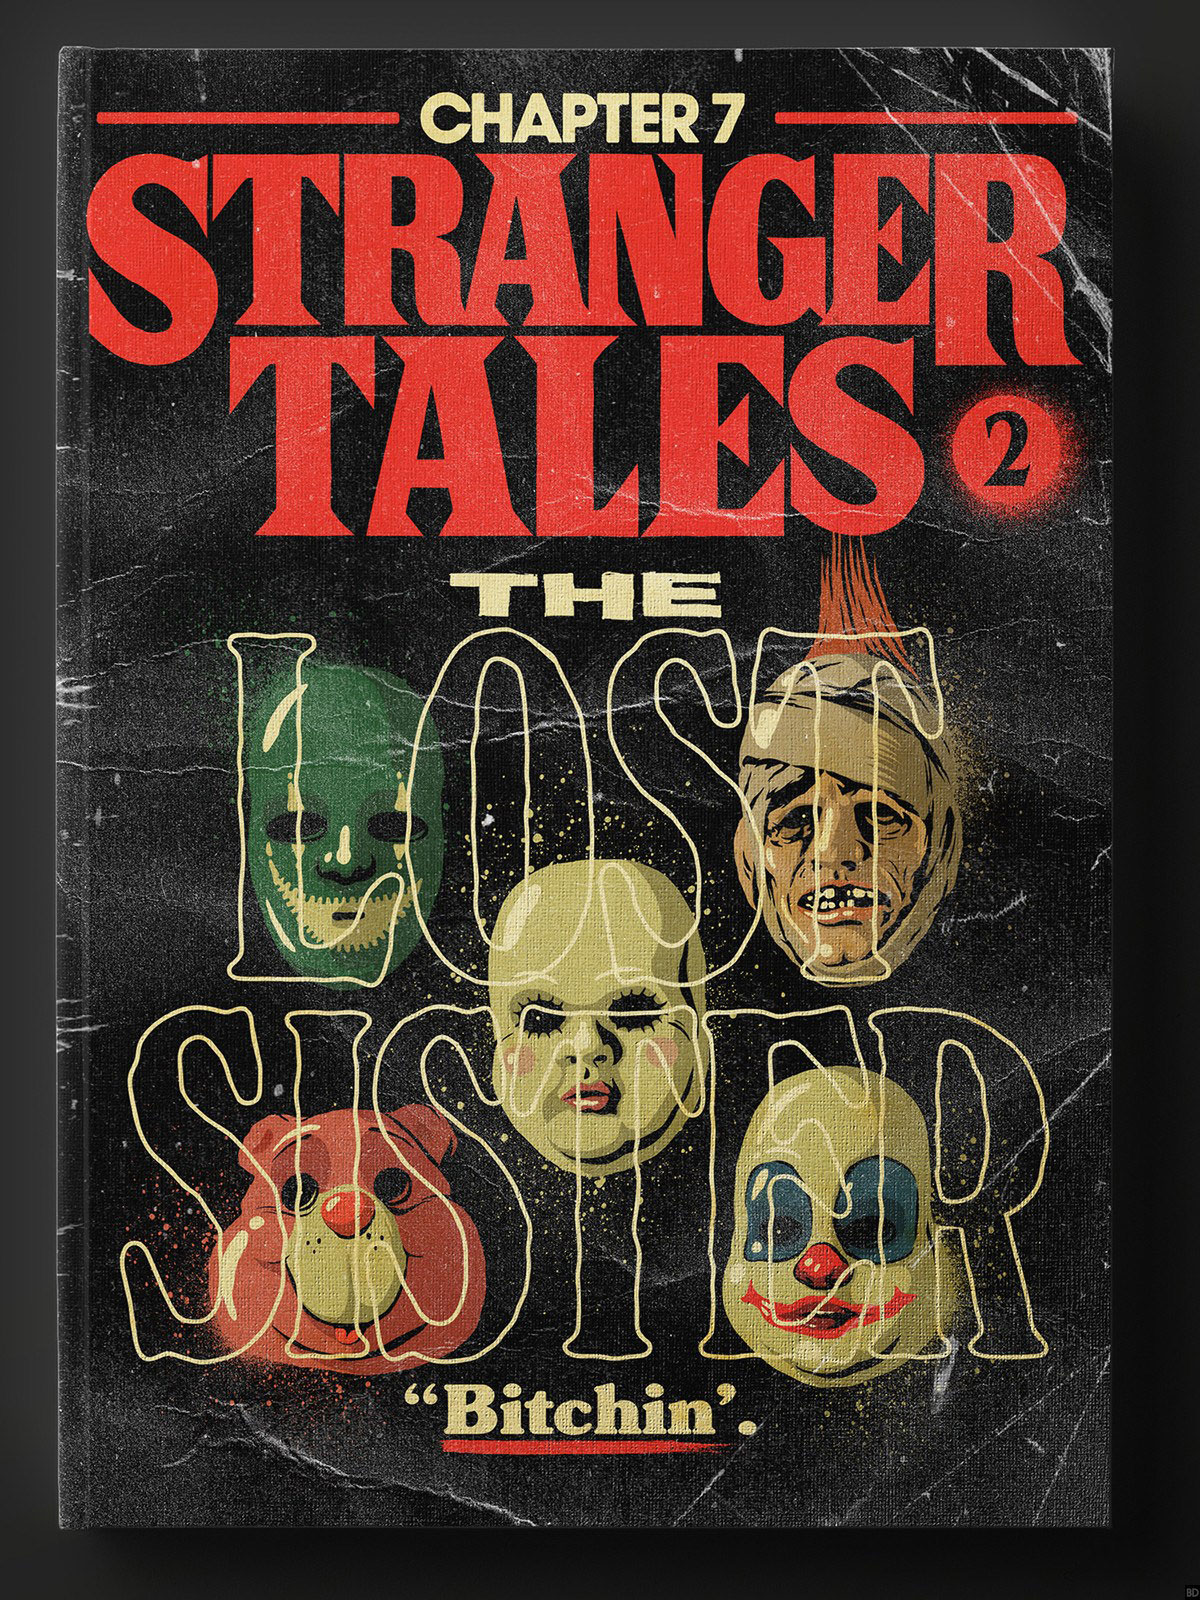 Retro Book Covers for “Stranger Things” Season 2 - Horror ... - 1200 x 1600 jpeg 722kB